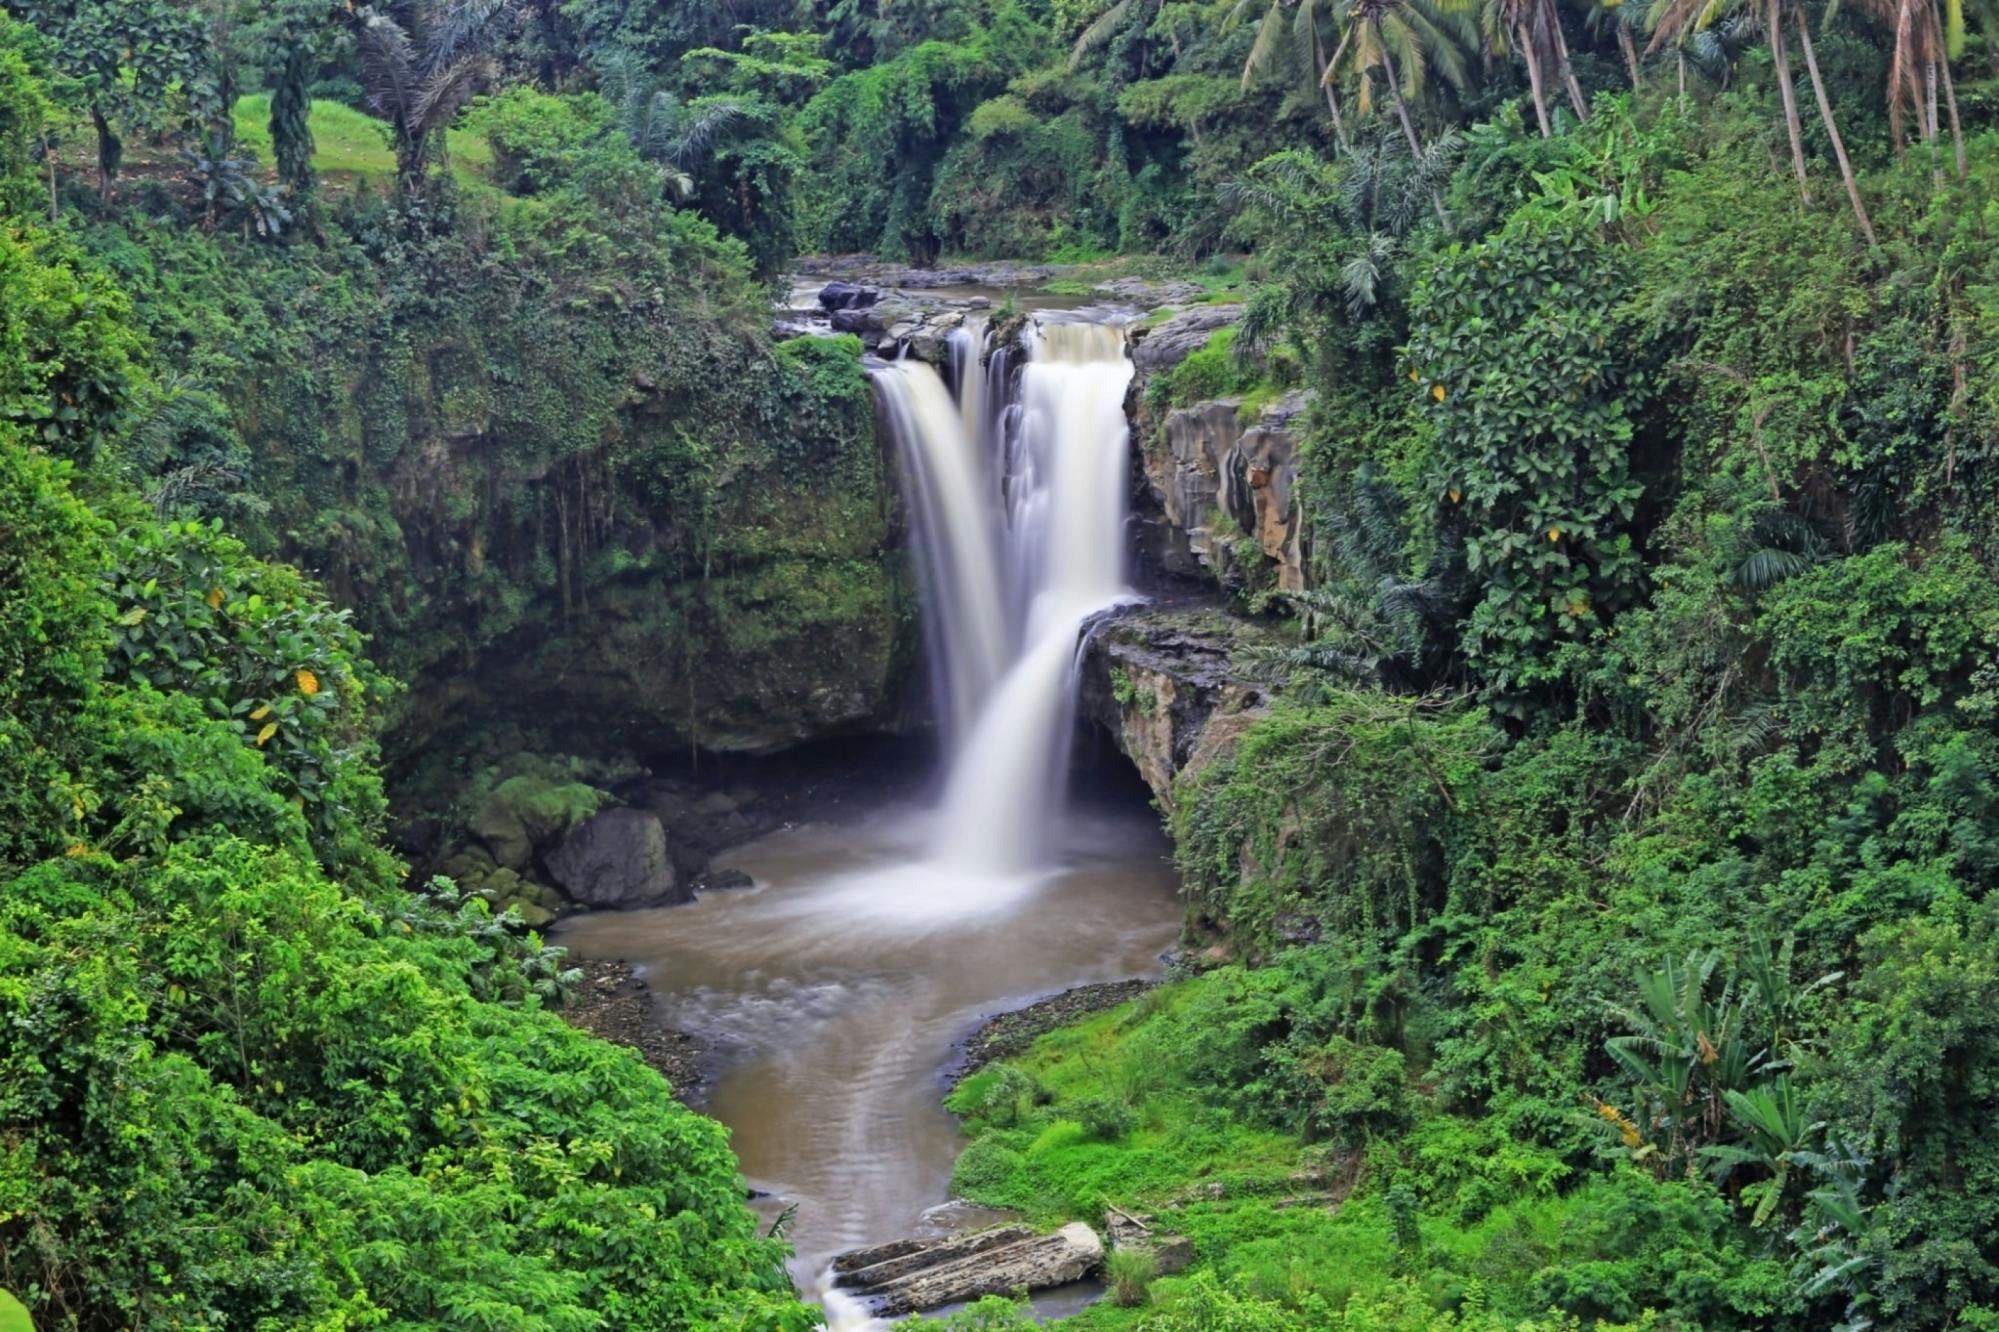 Najlepsze wodospady Bali: Tibumana, Tukad Cepung i Tegenungan